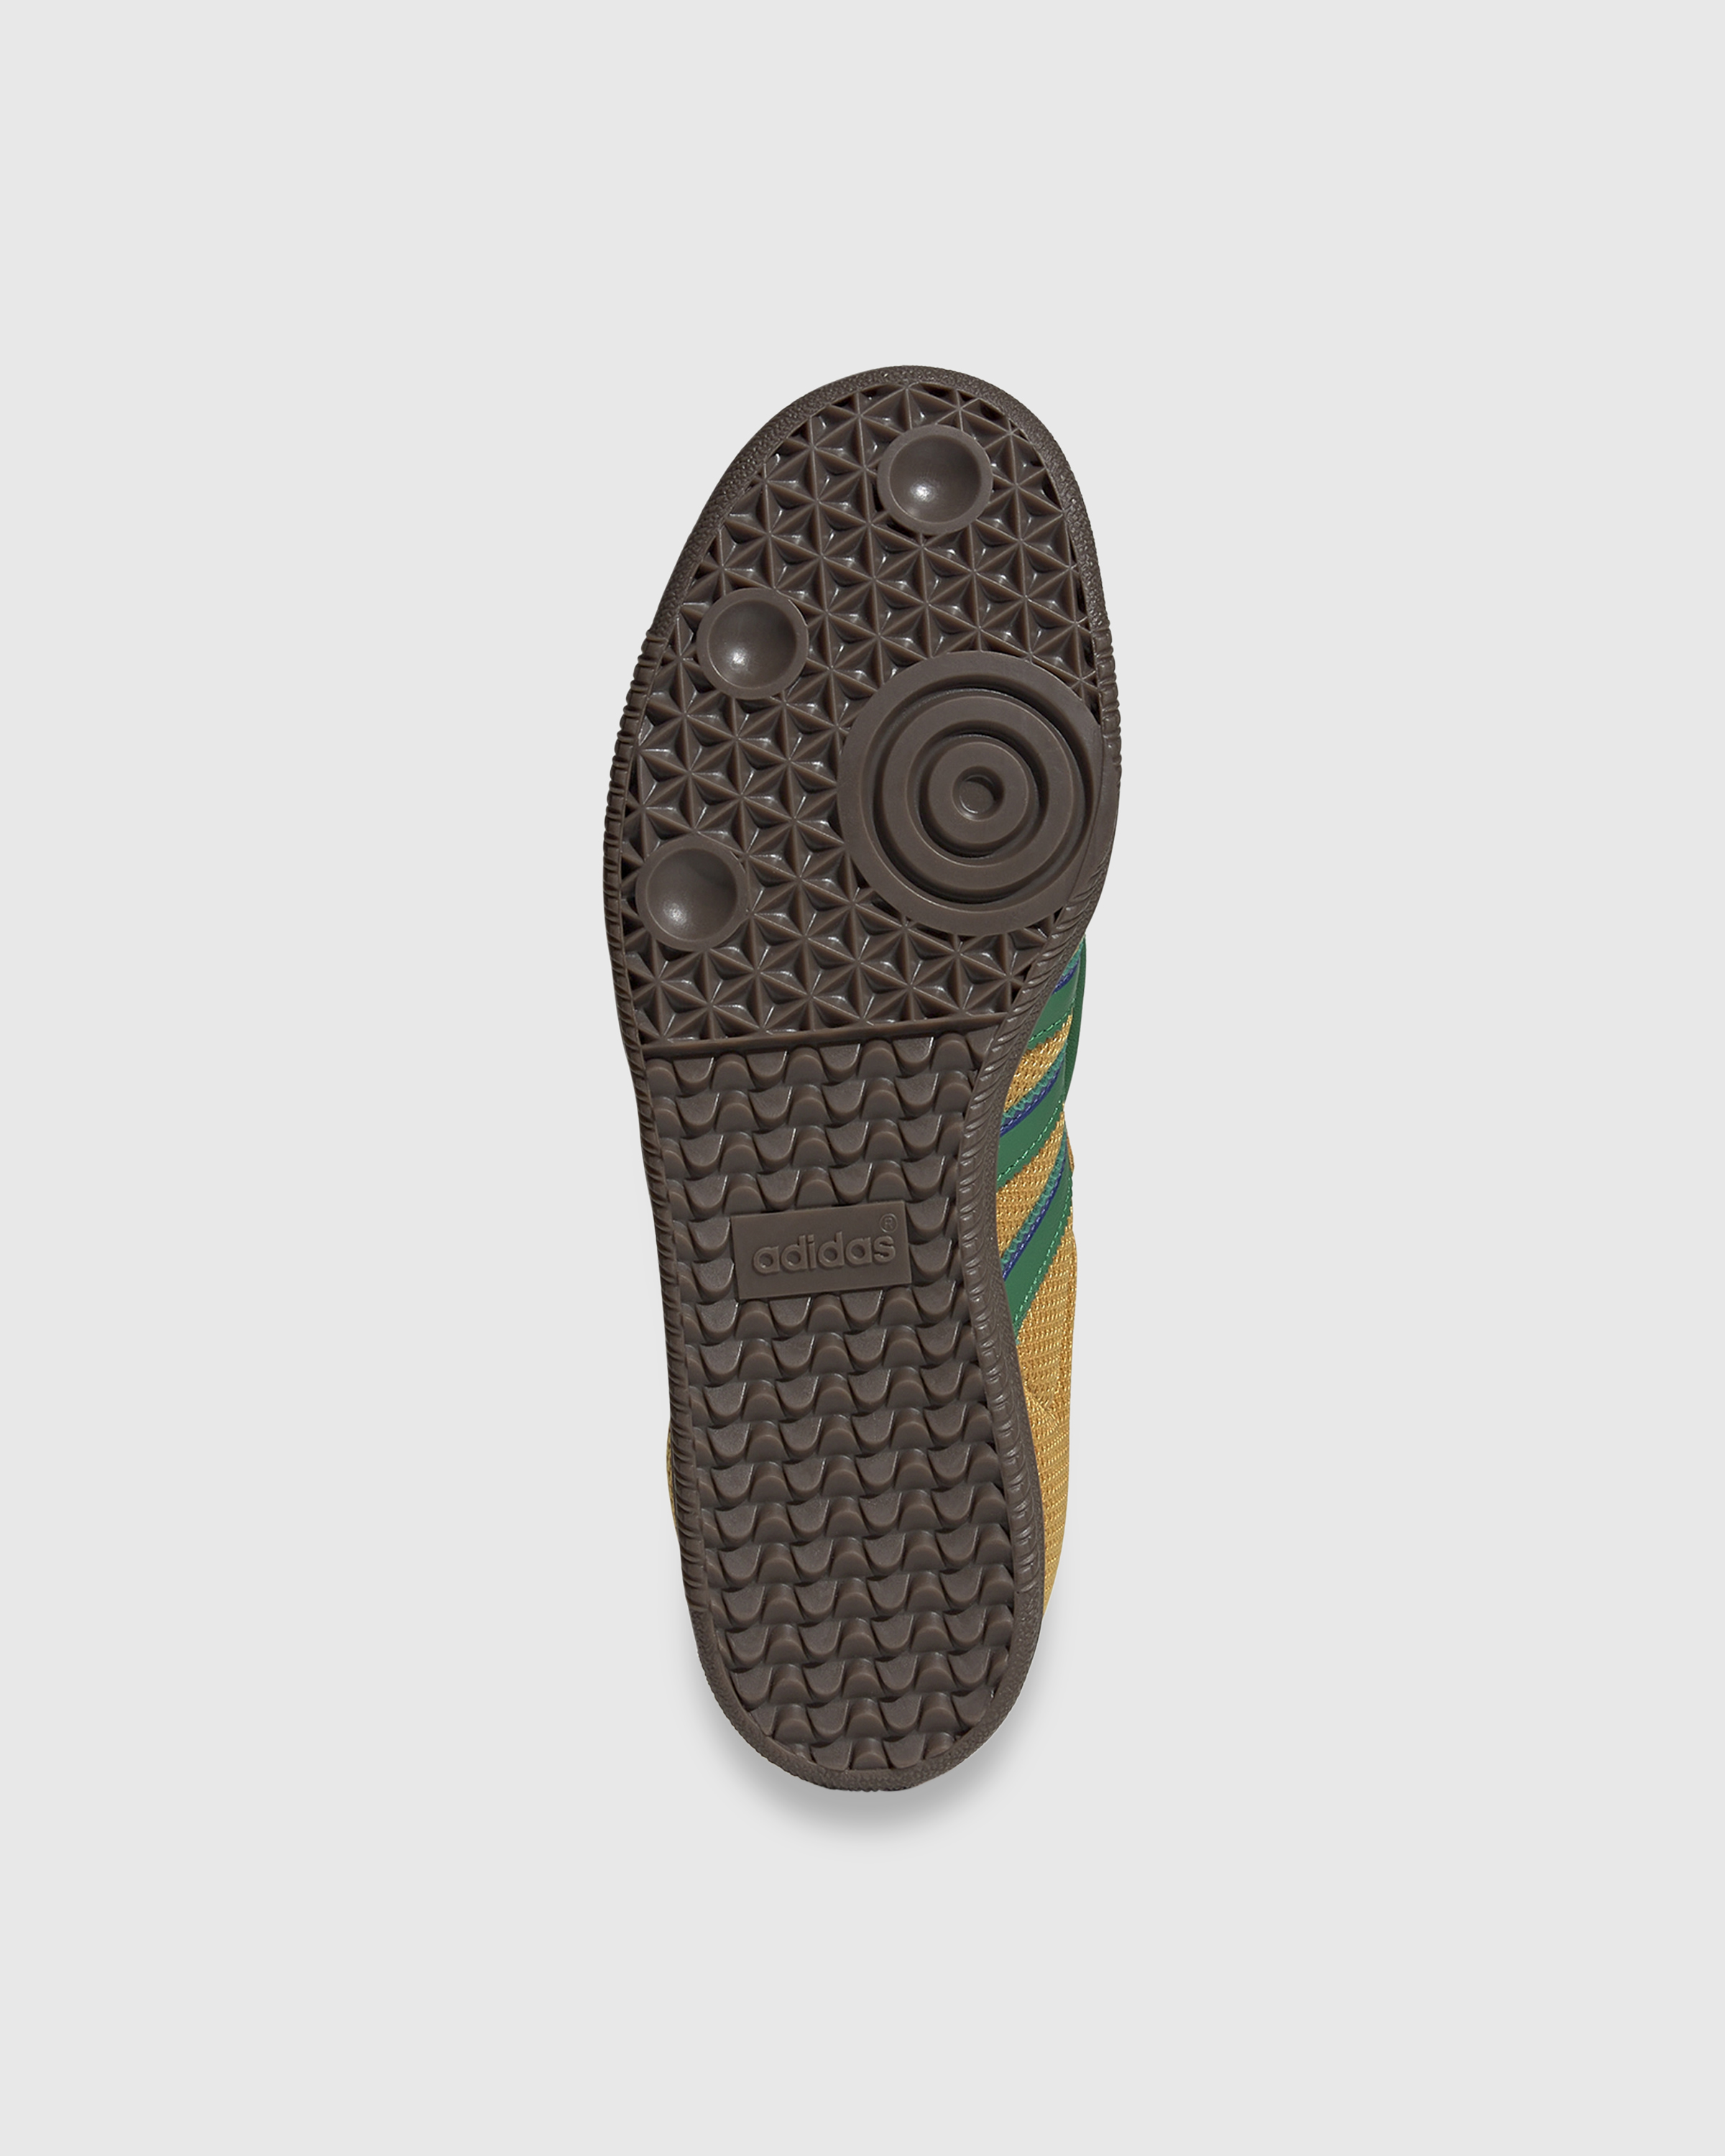 Adidas – Samba LT Preyel/Green/Gum - Low Top Sneakers - Orange - Image 6